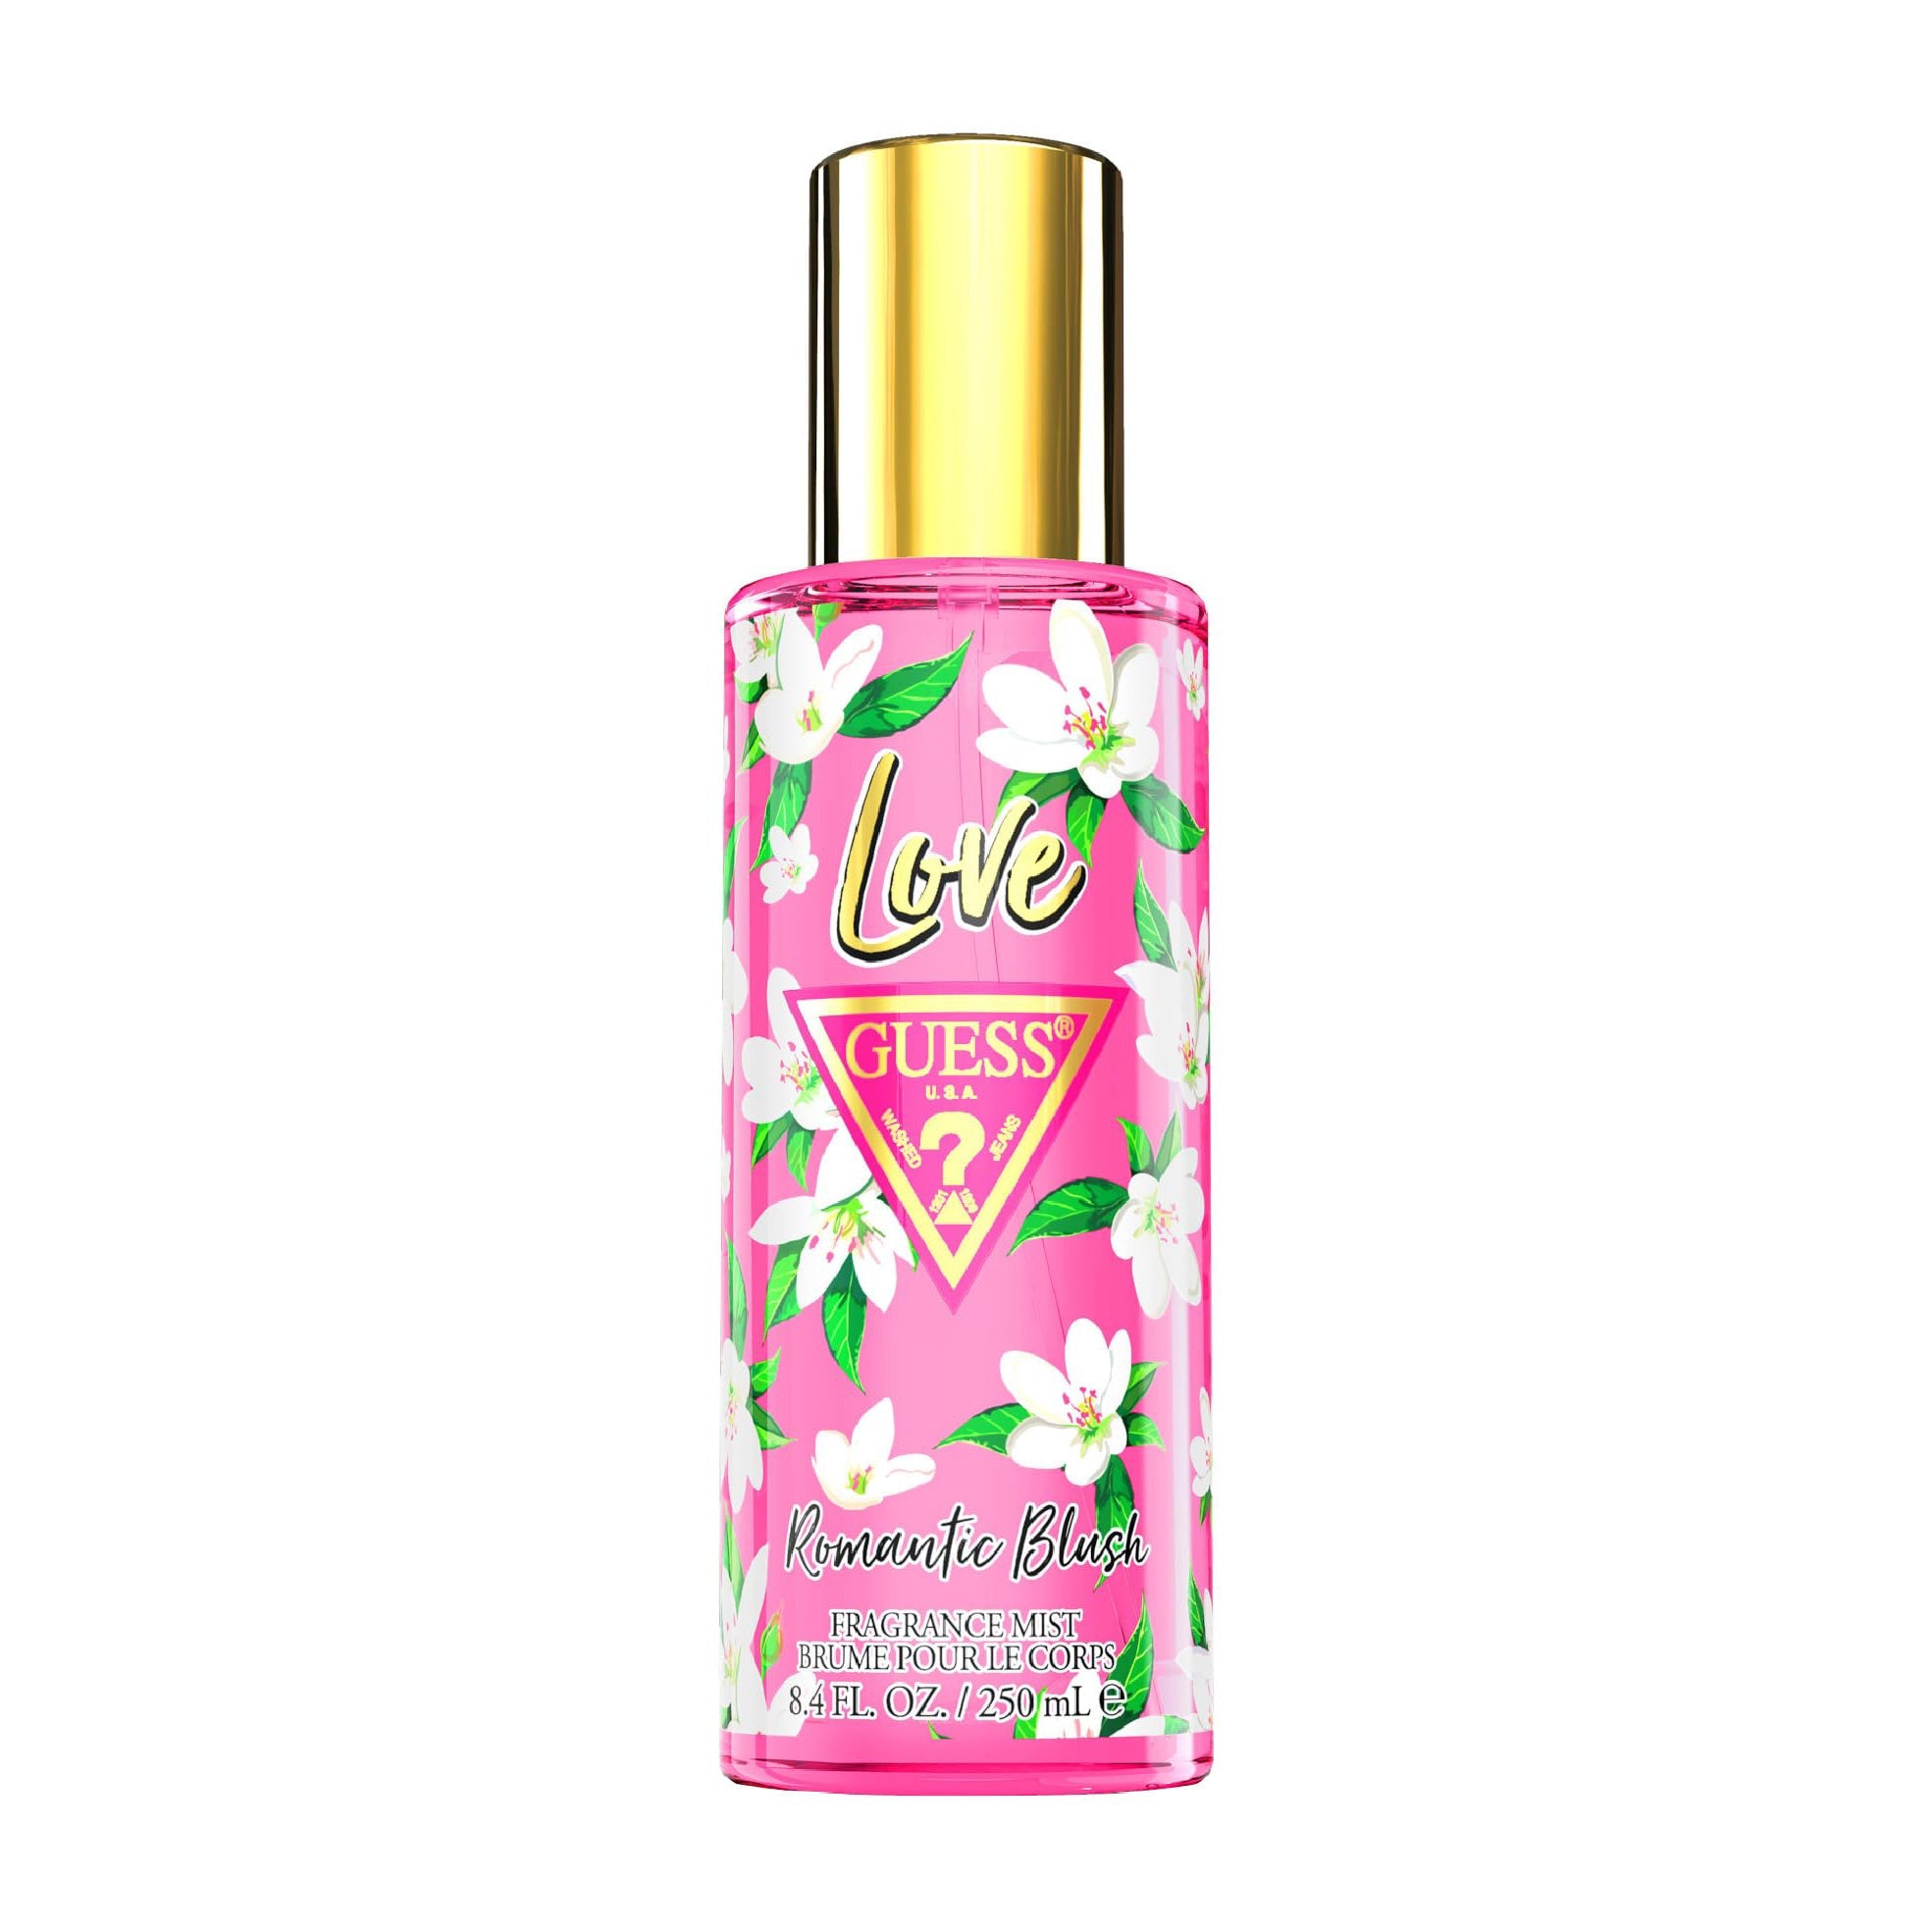 Guess Love Romantic Blush Body Mist - 250ml - Bloom Pharmacy